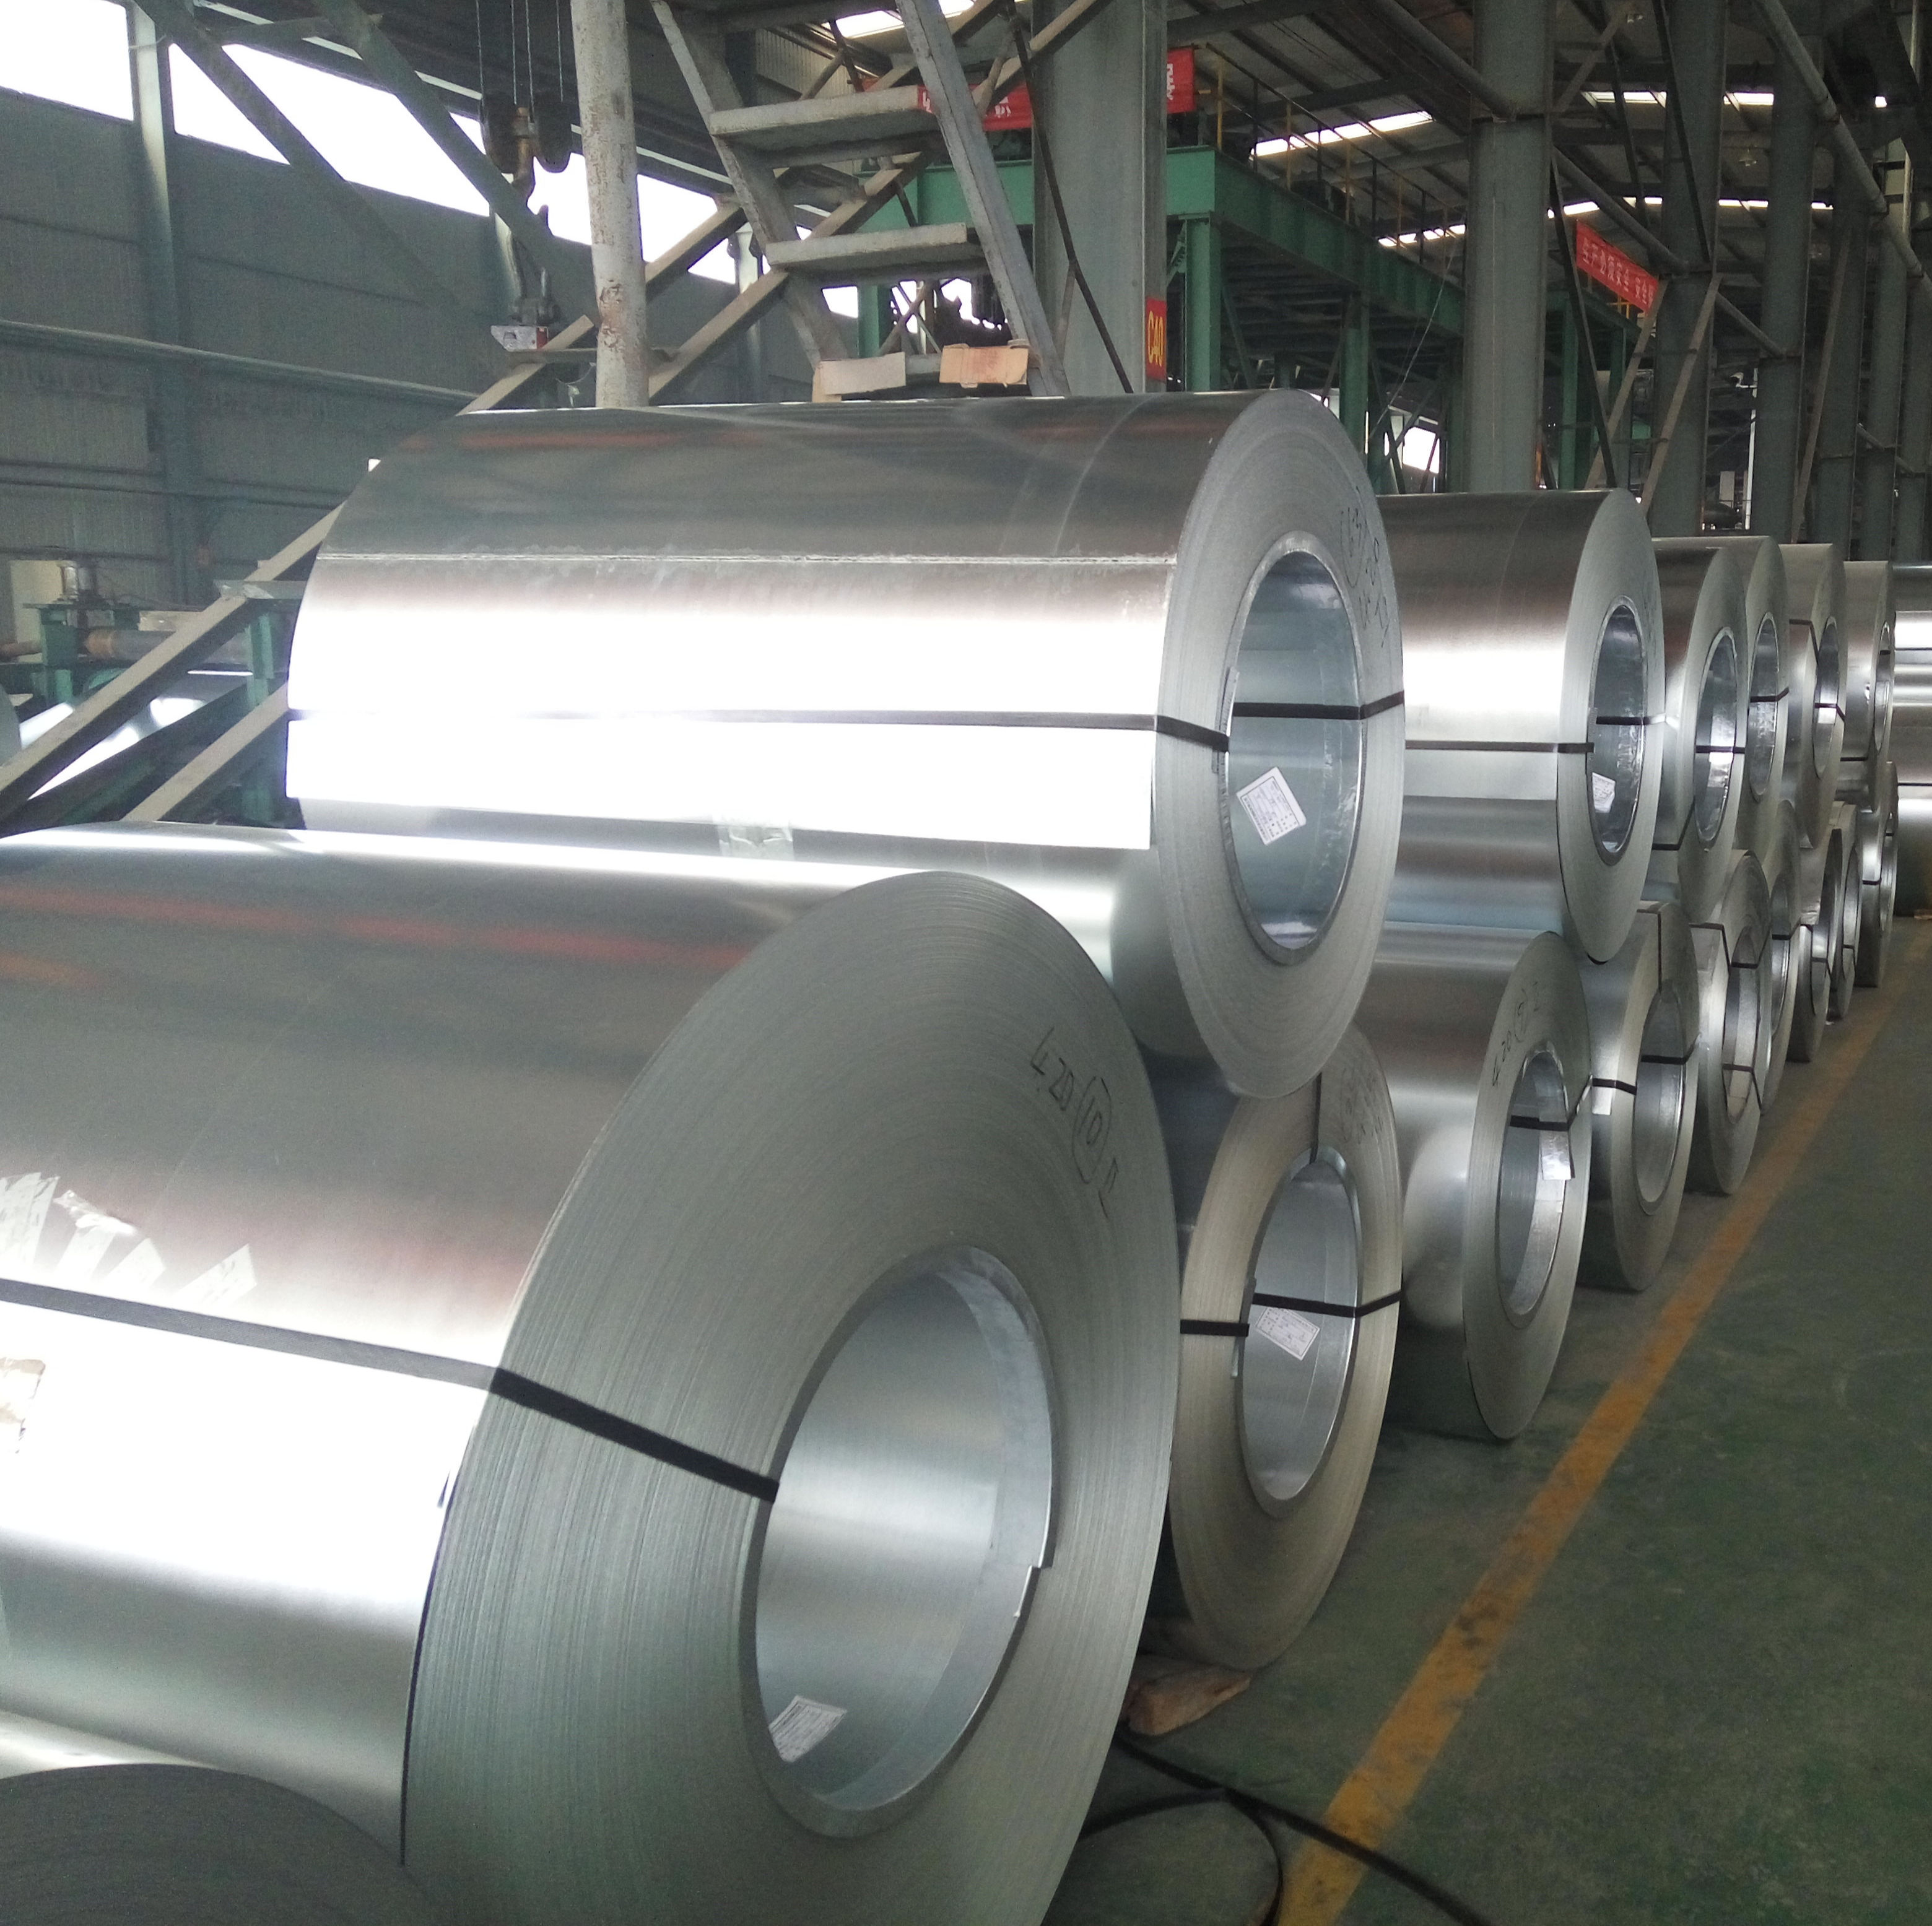 Shandong Kungang Metal Technology Co., Ltd වැඩිදියුණු කළ ආරක්ෂාව සඳහා ගැල්වනයිස් කරන ලද දඟර හඳුන්වා දෙයි